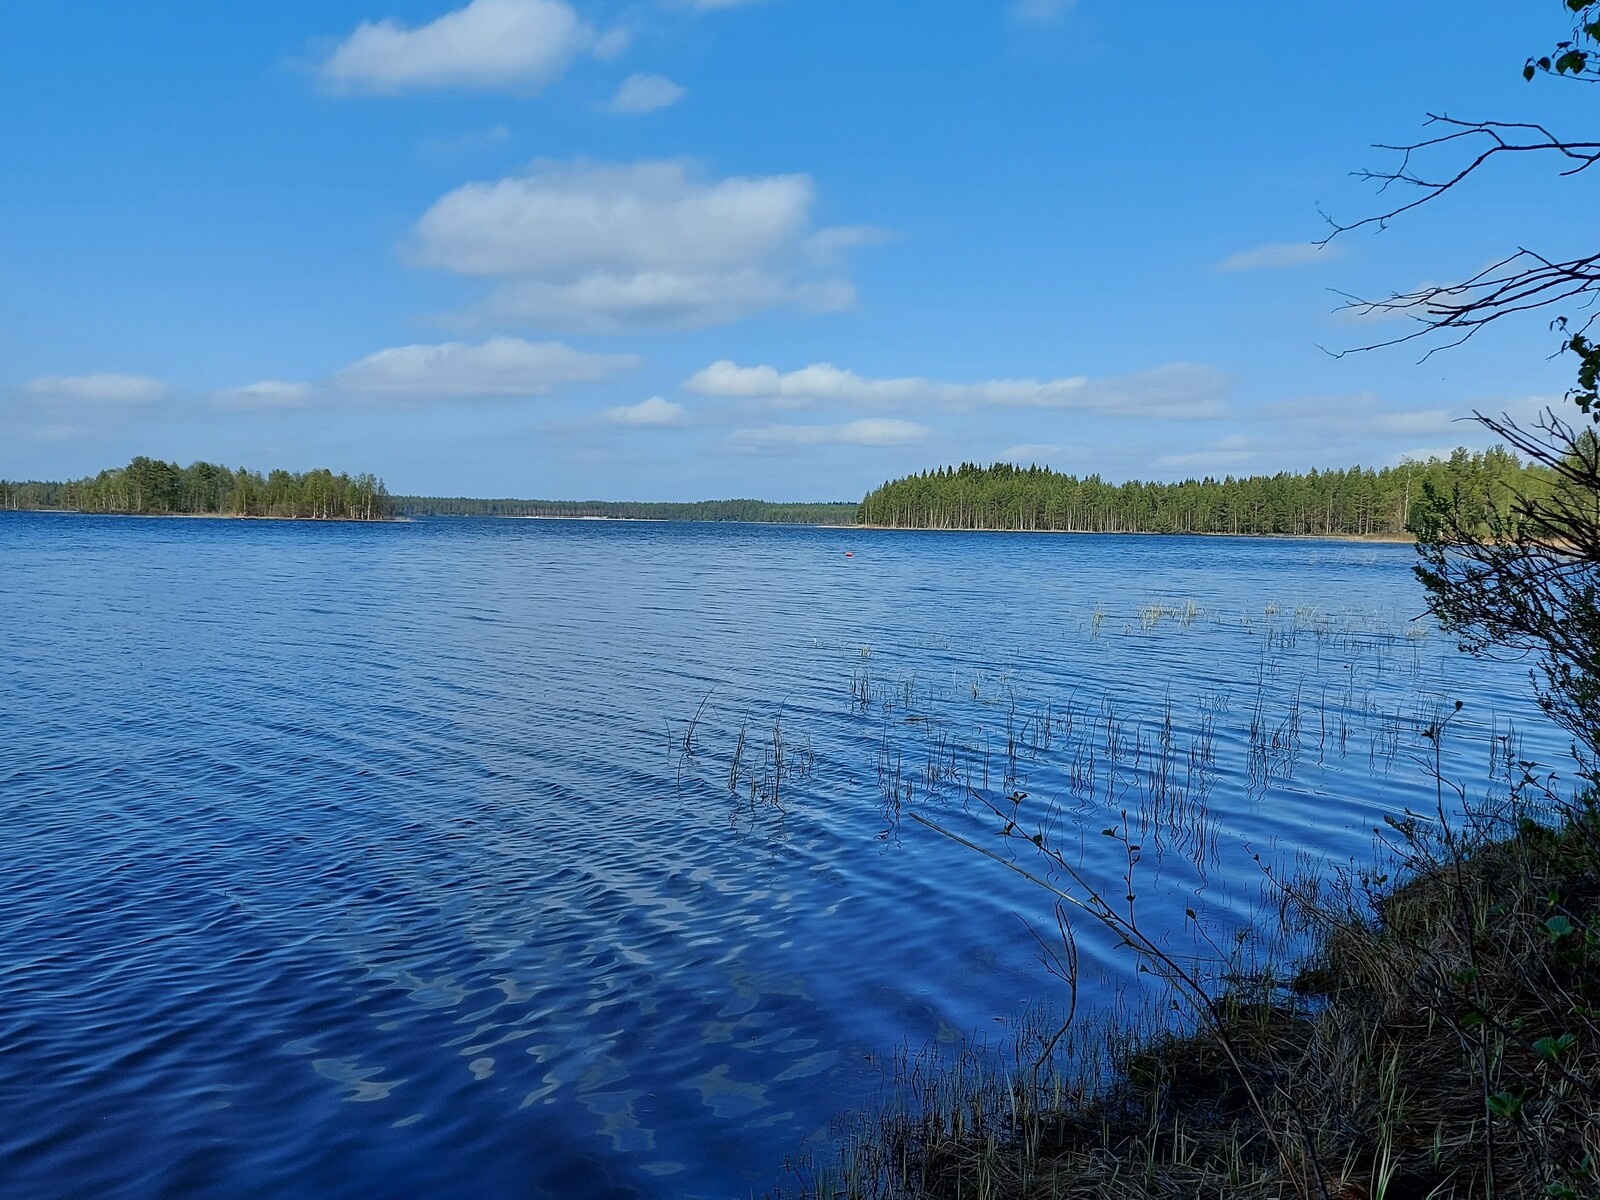 Näkymä järvelle, jossa näkyy saari ja niemenkärki